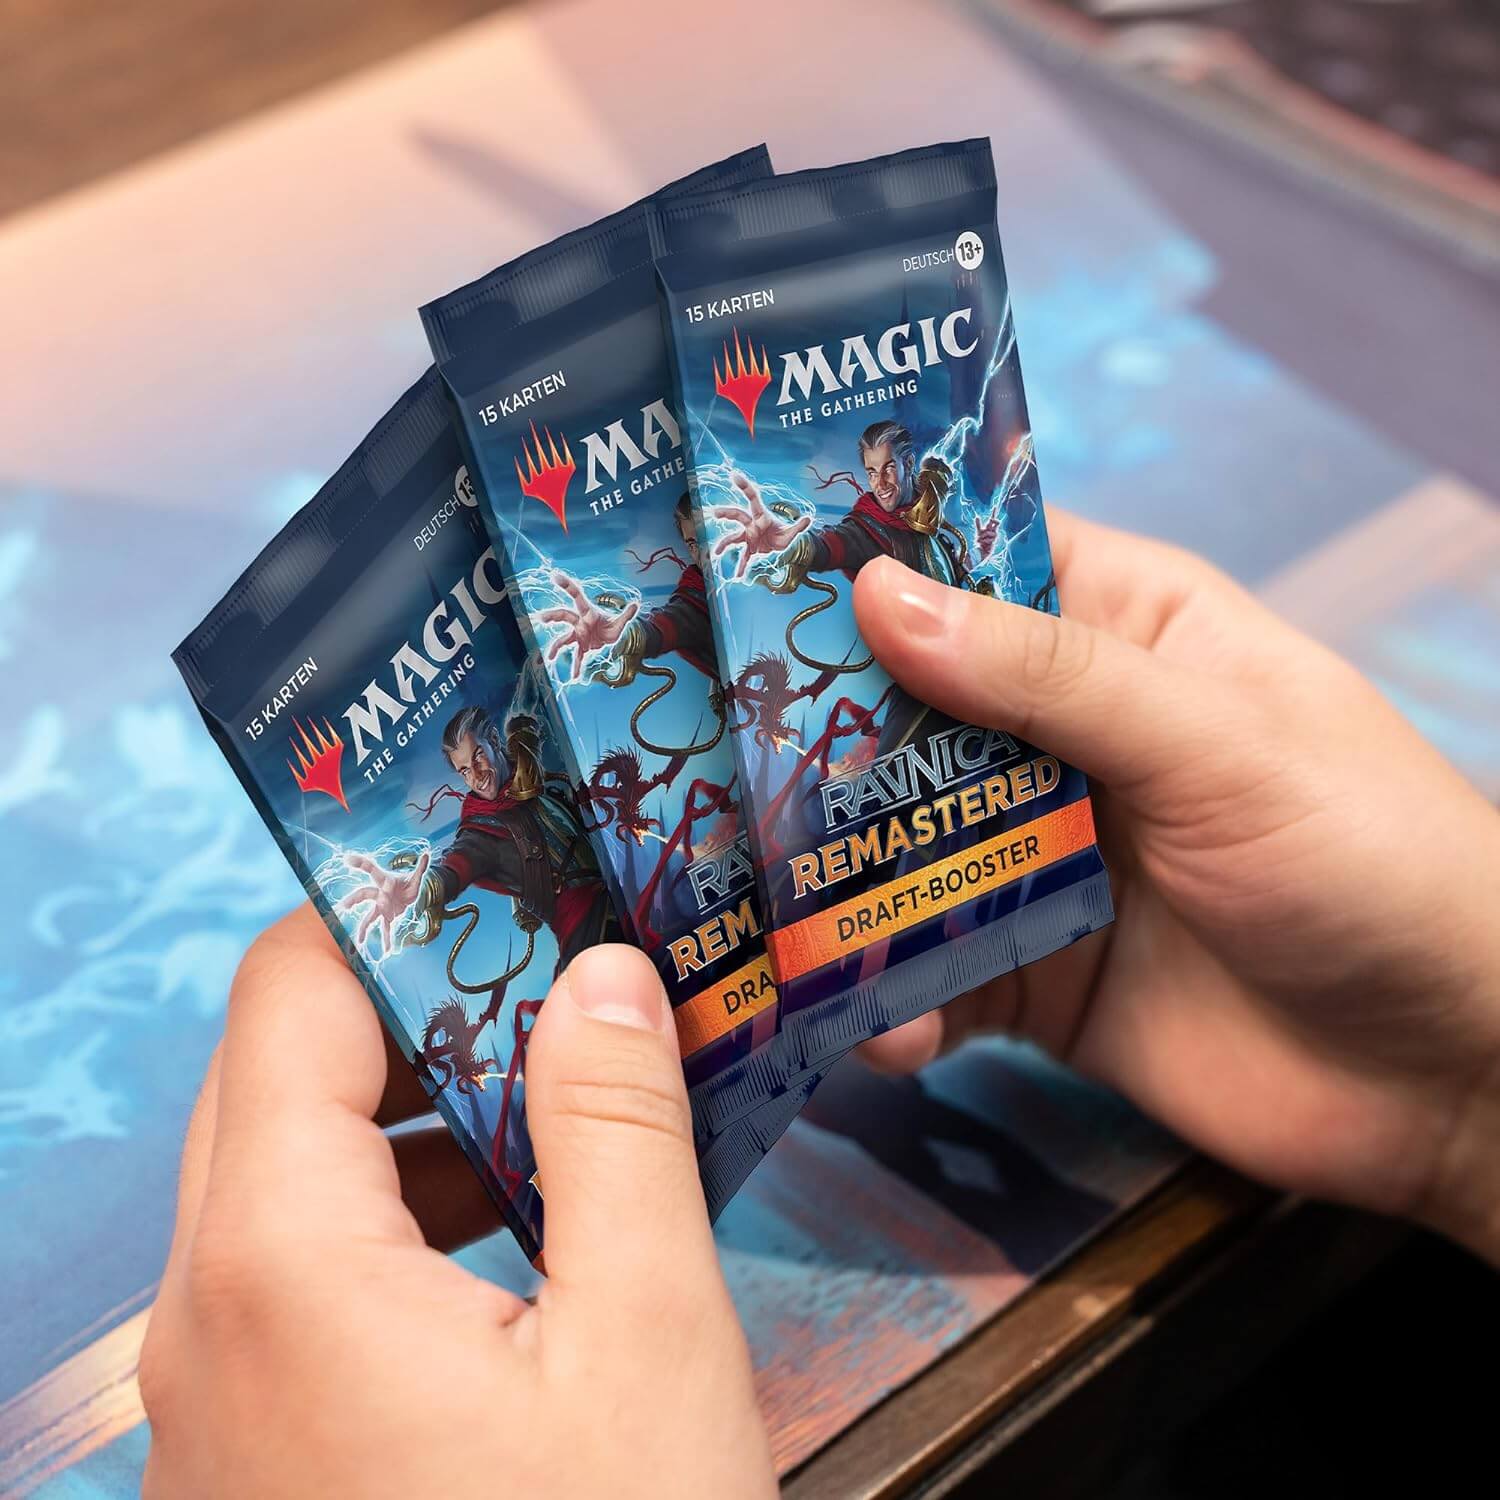 Magic: The Gathering - Ravnica Remastered Draft Booster Display - DE - CardCosmos